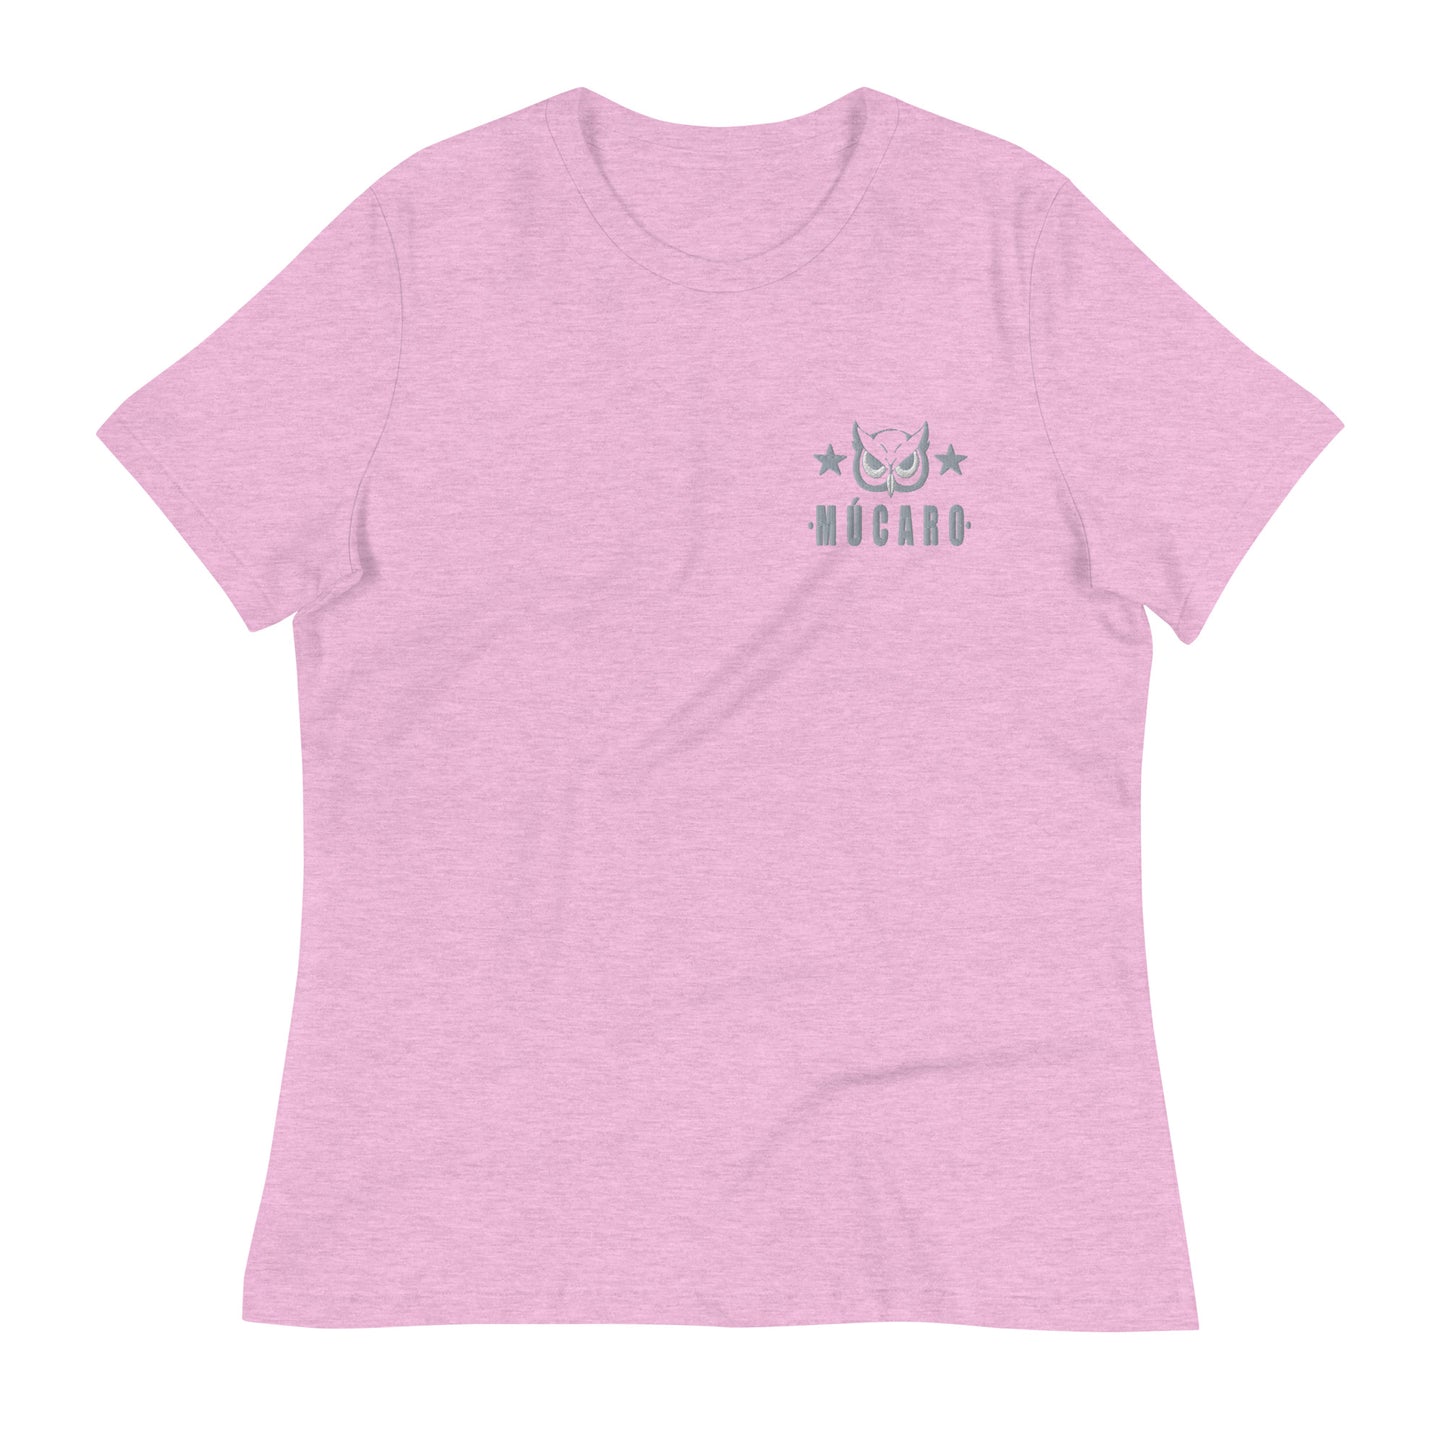 Múcaro’s Really Sexy Women's T-Shirt